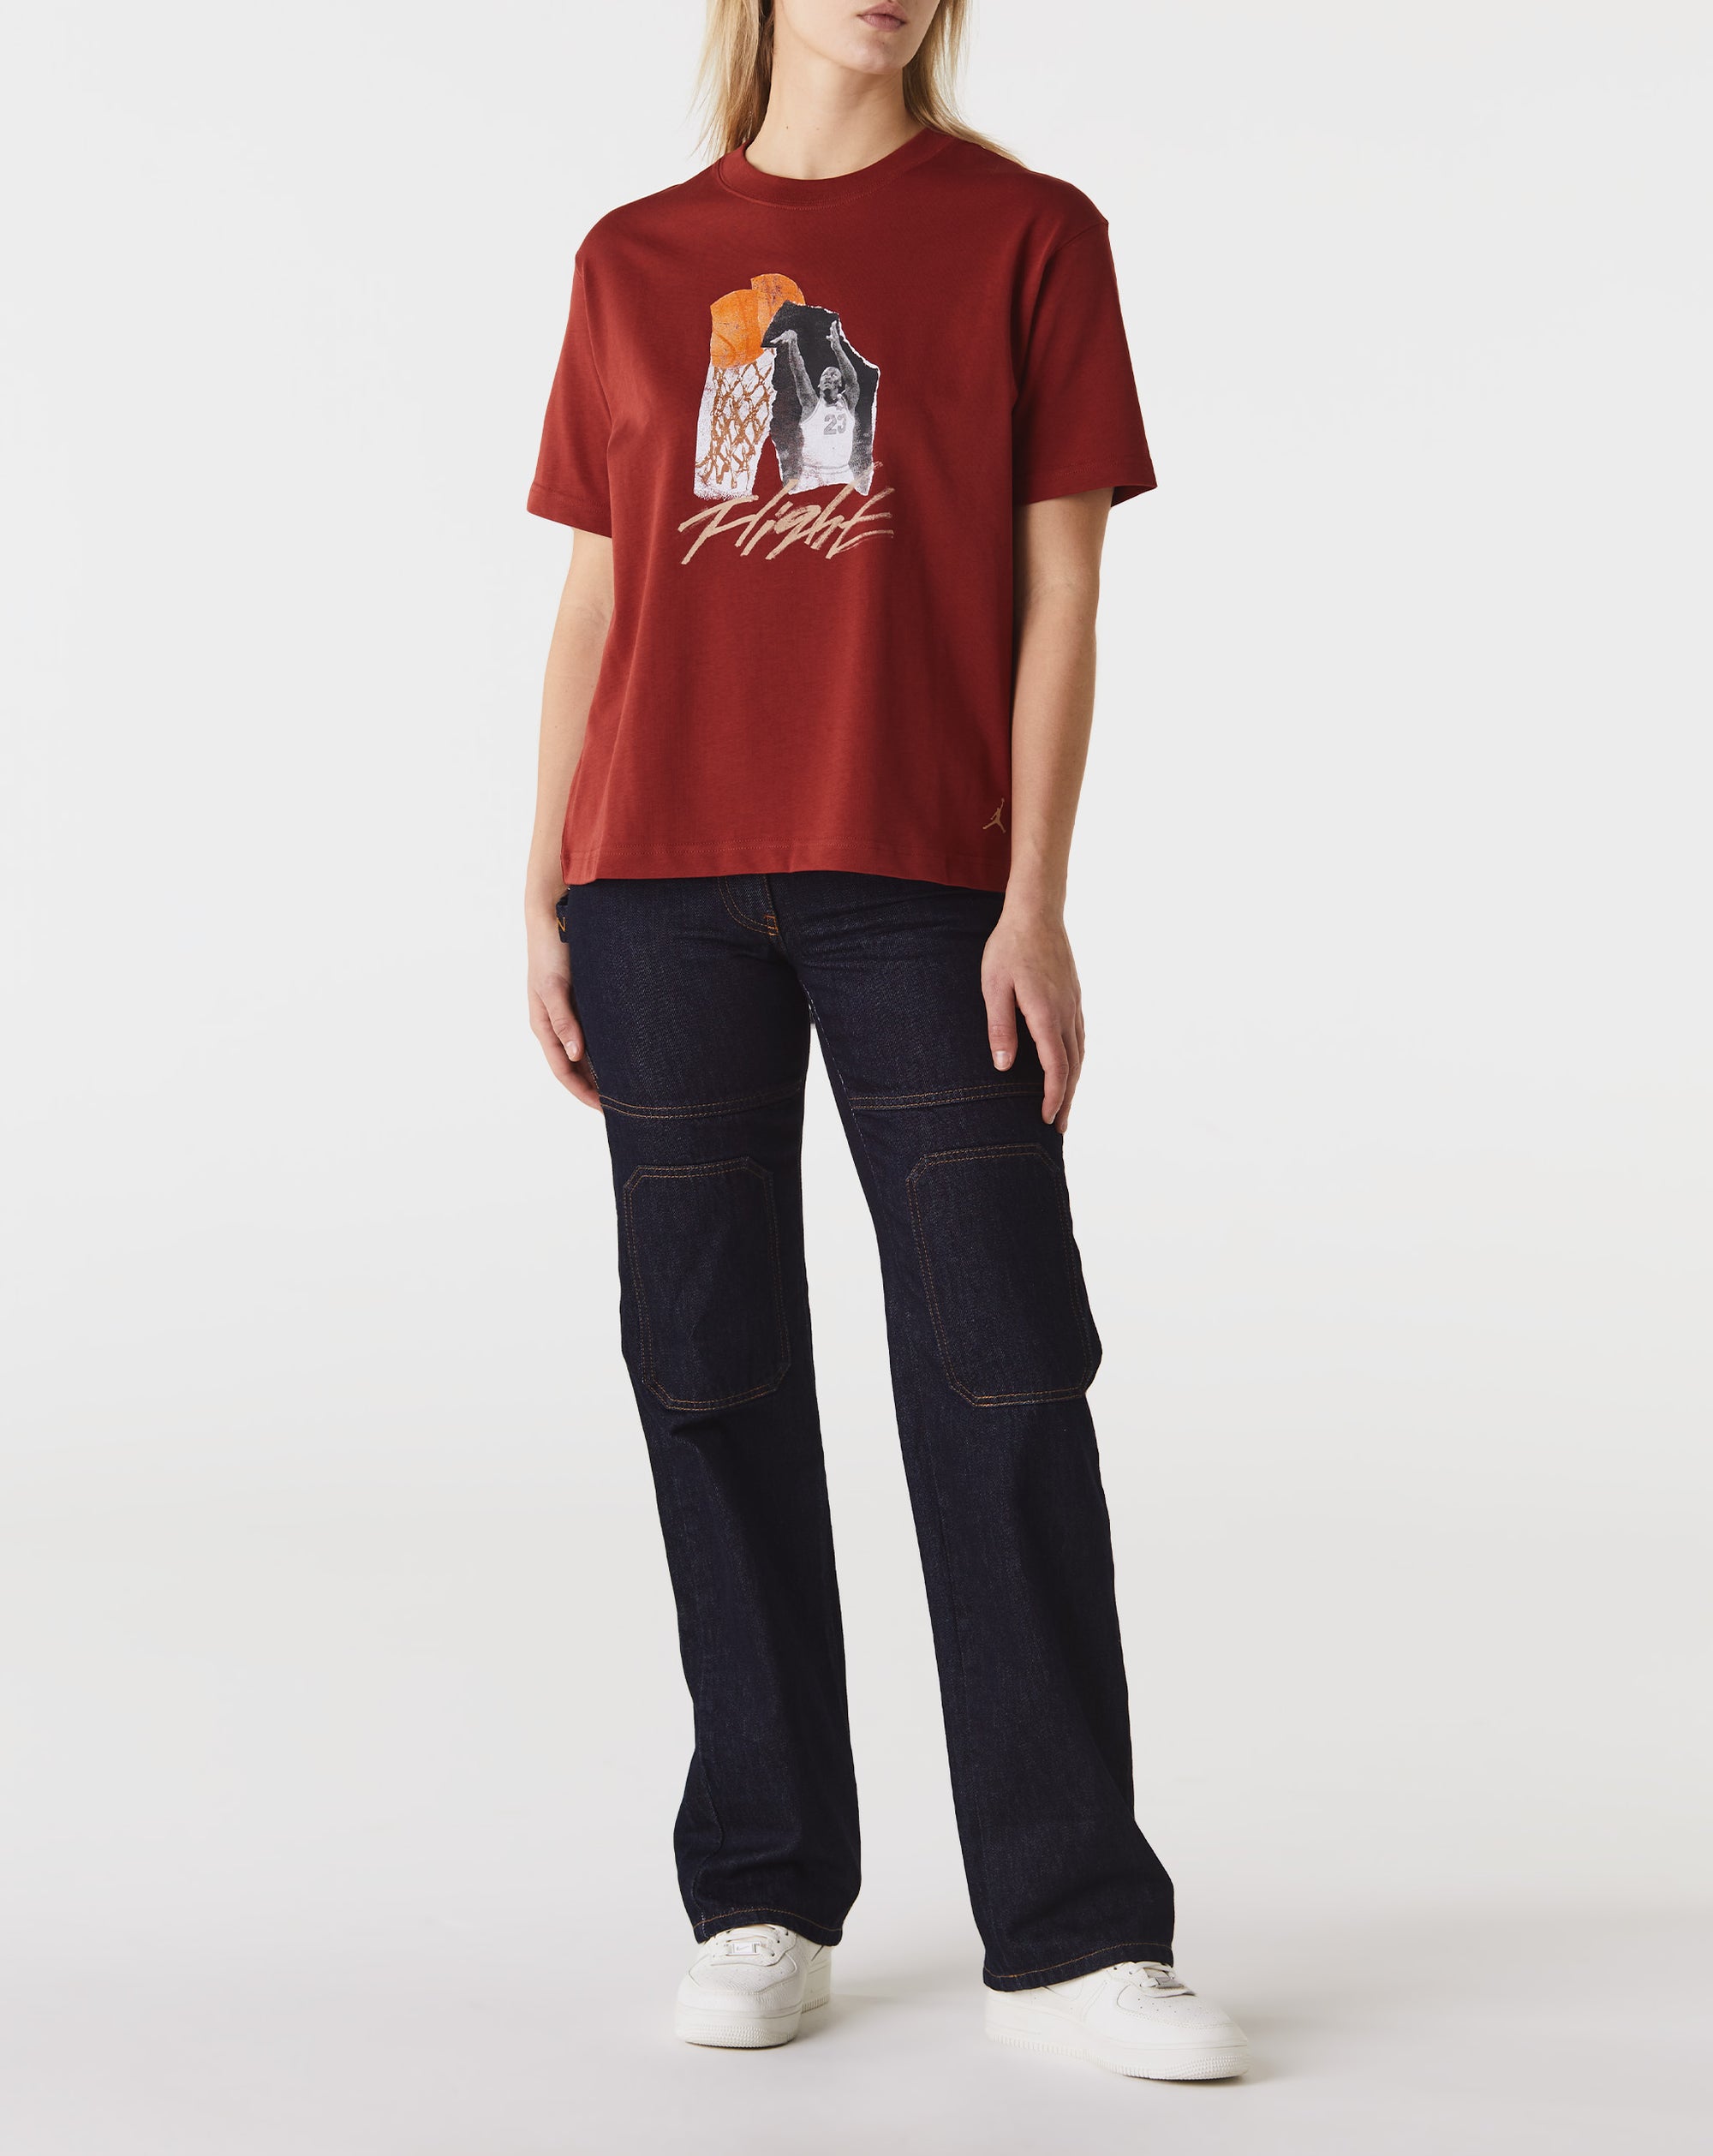 Air Jordan Women's Collage Girlfriend T-Shirt - Rule of Next Apparel